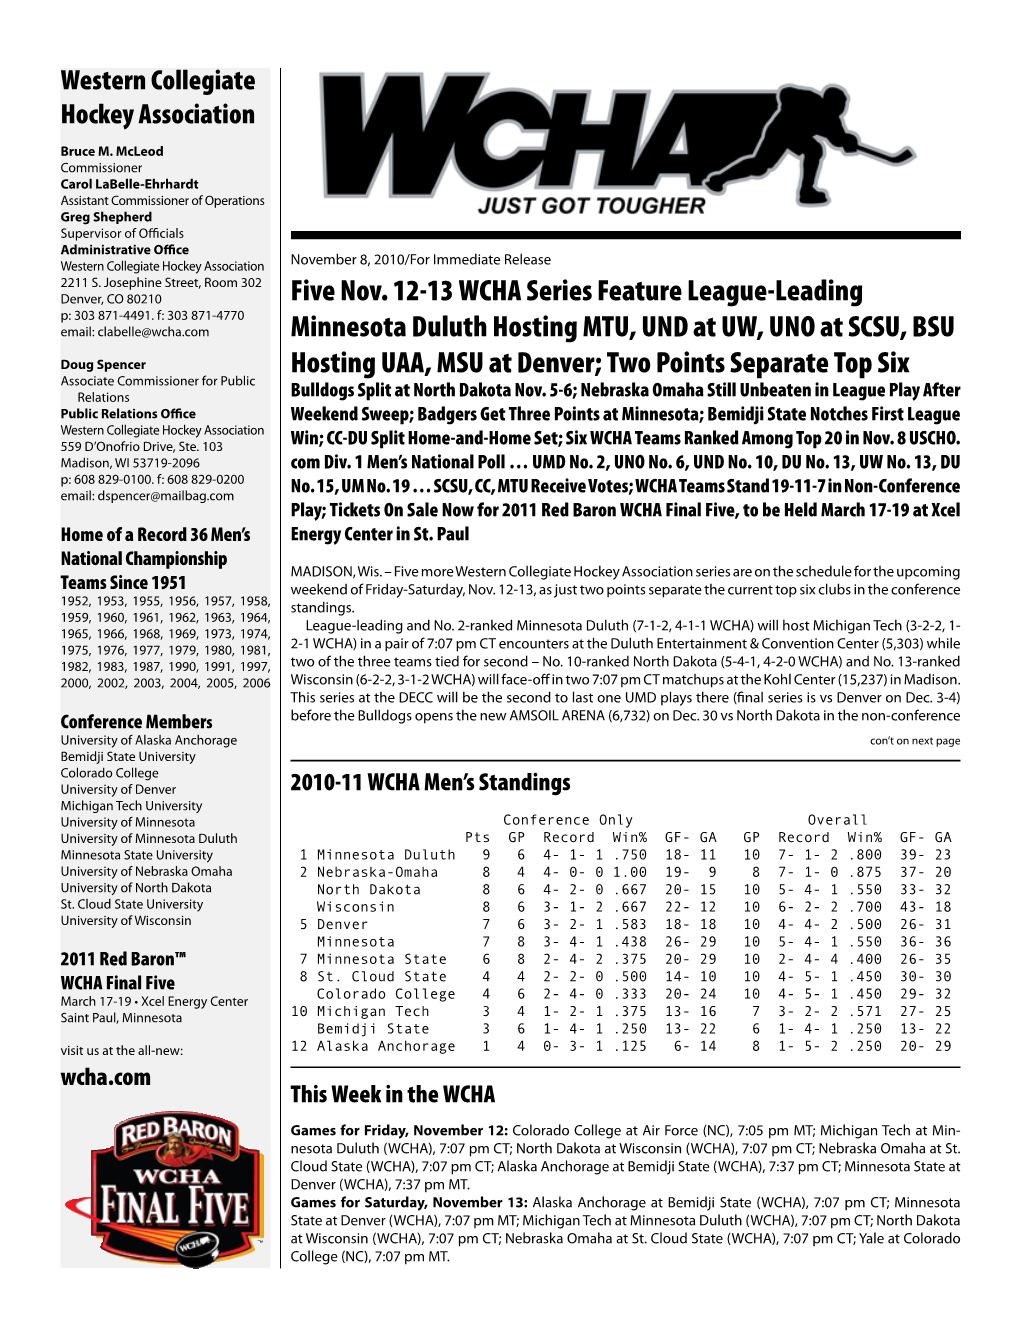 Five Nov. 12-13 WCHA Series Feature League-Leading Minnesota Duluth